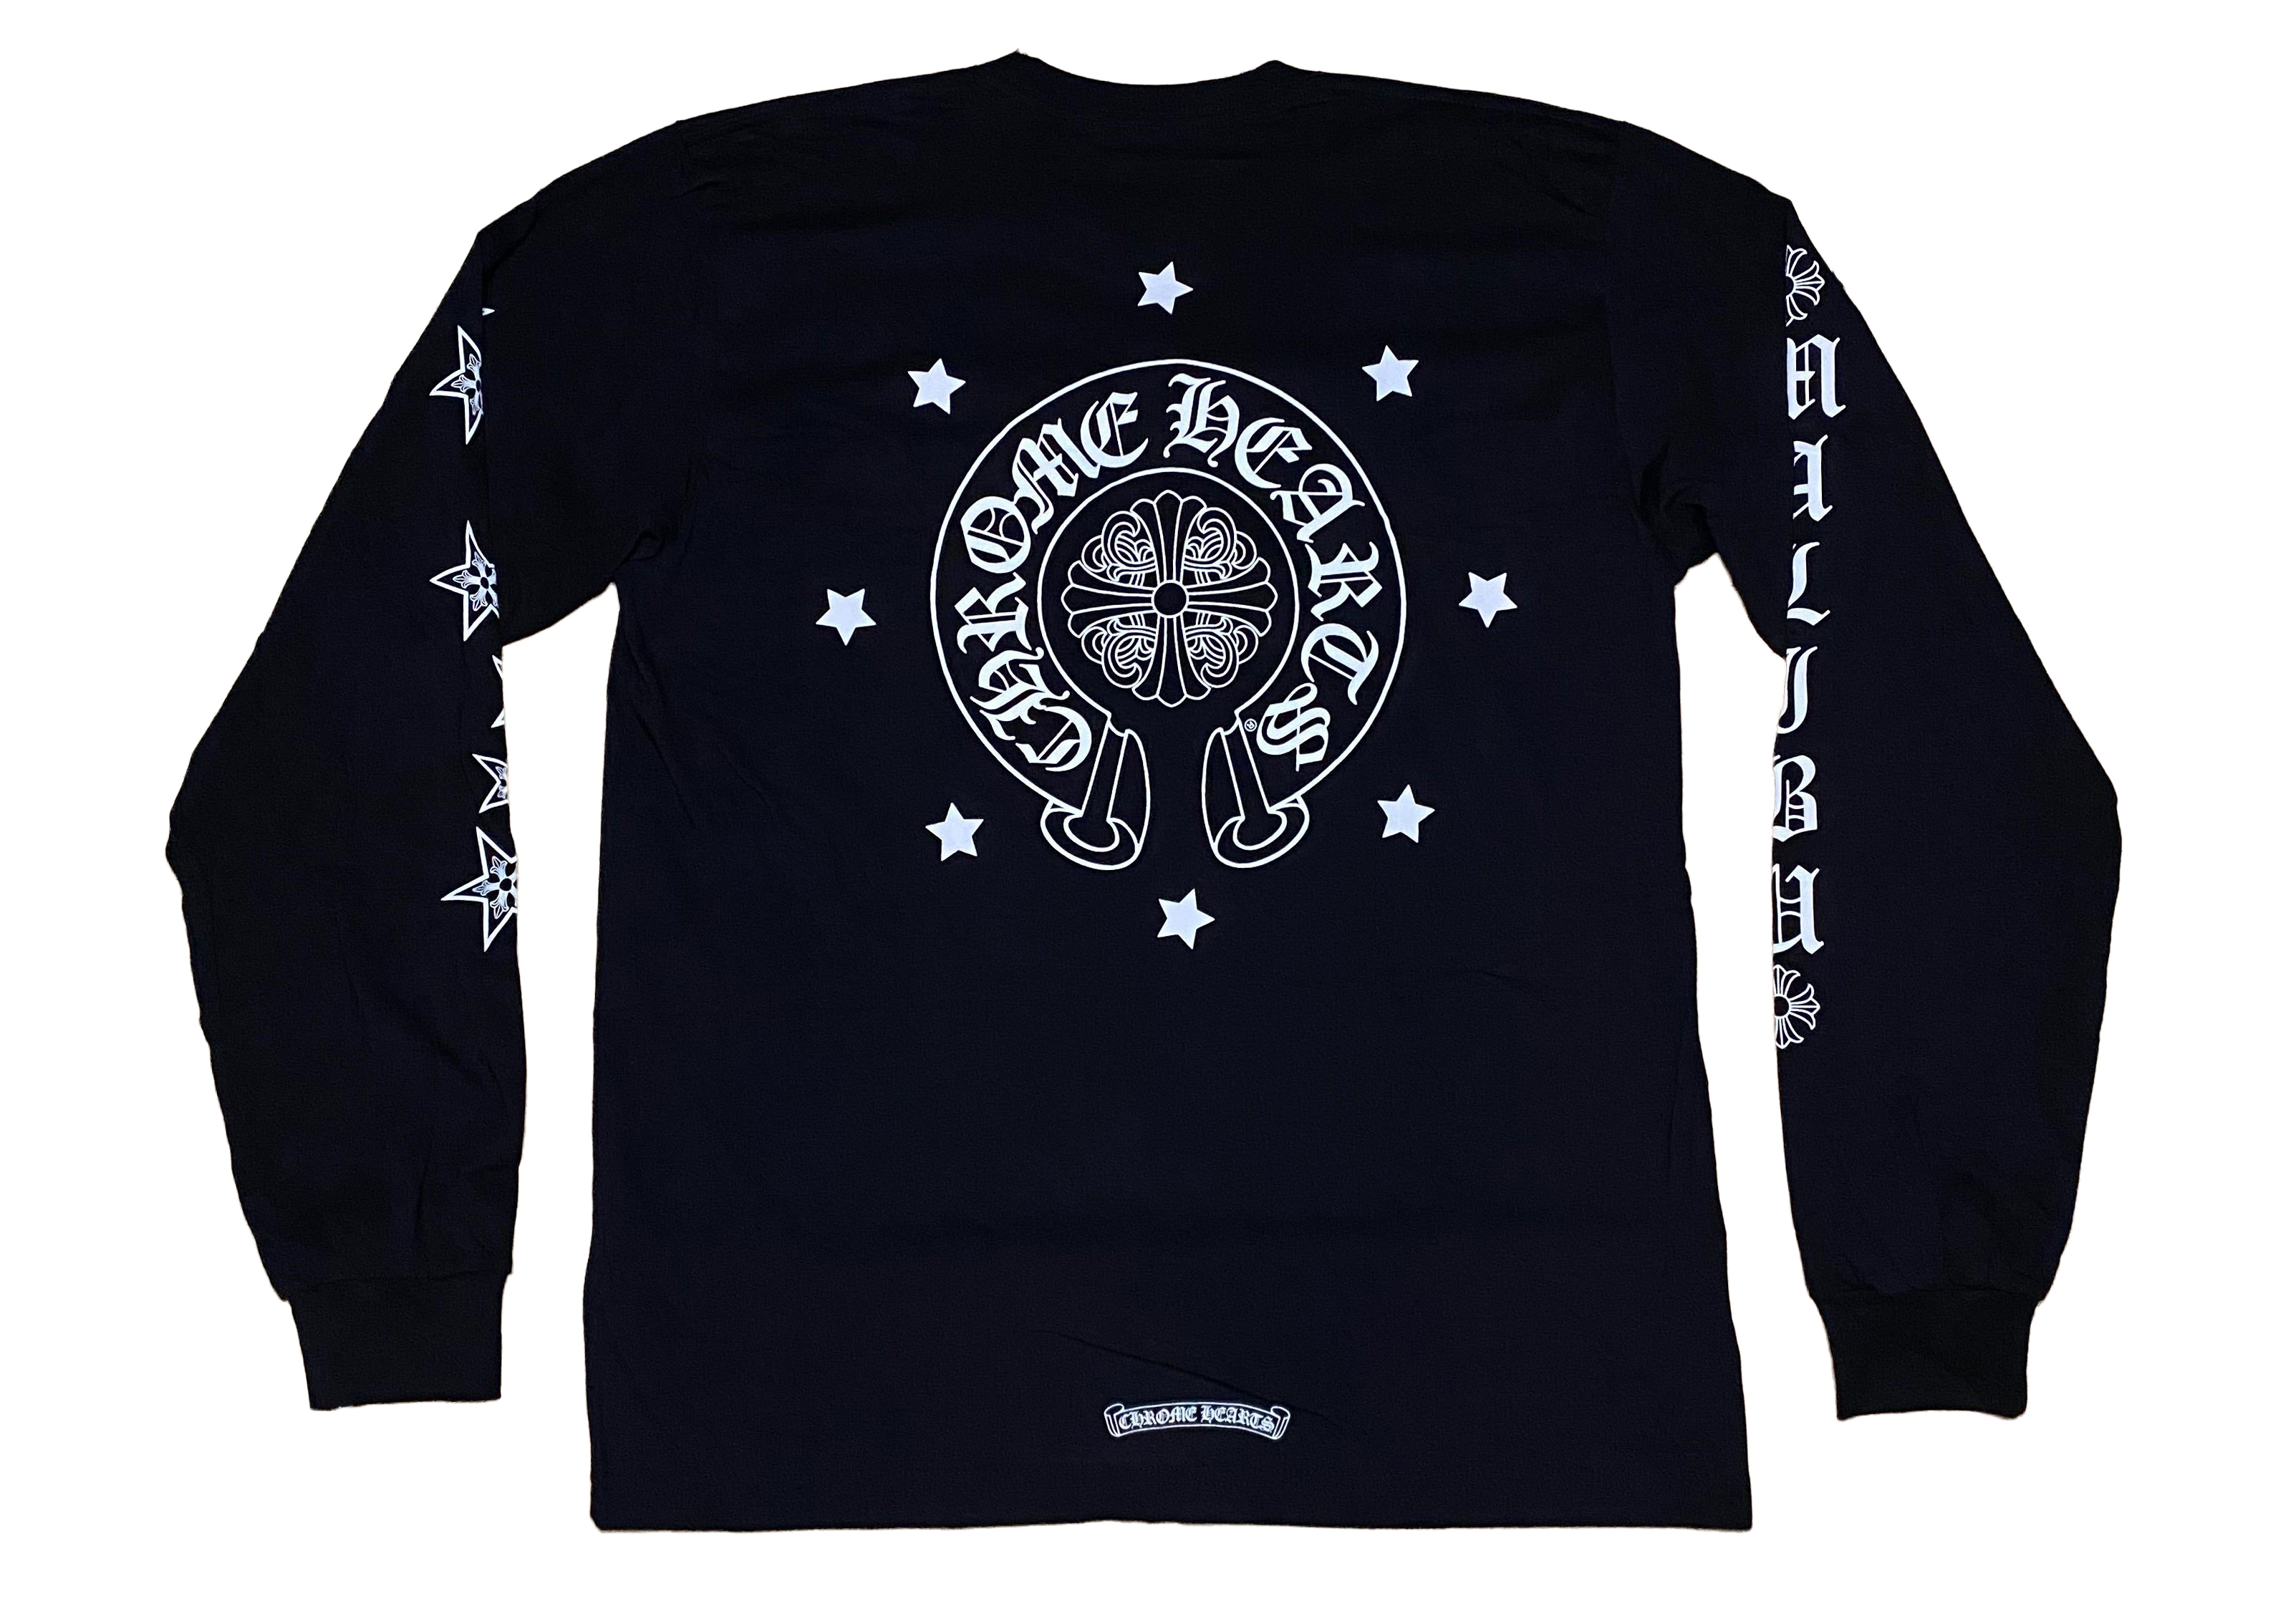 Chrome Hearts Malibu Exclusive Stars L/S T-Shirt Black -